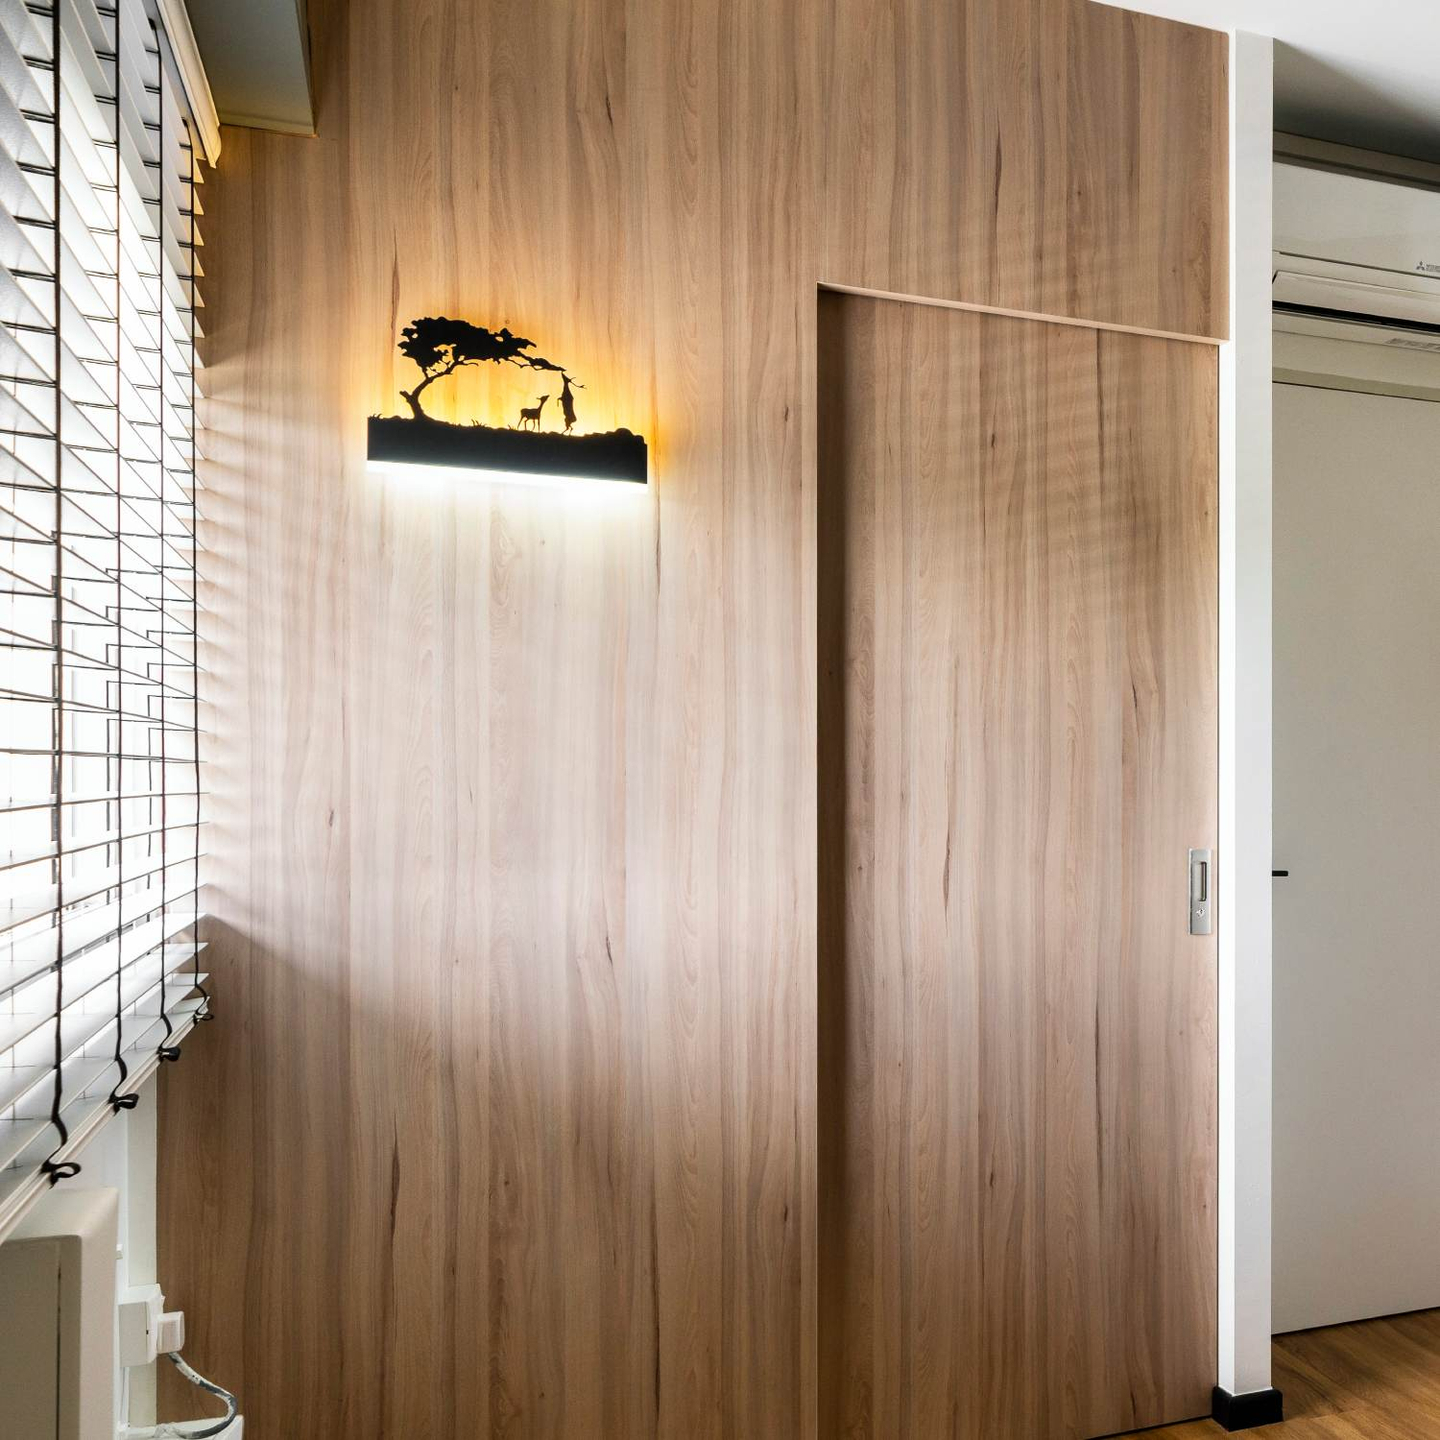 Wooden Laminate Design With A Clean, Matte Finish - Livspace